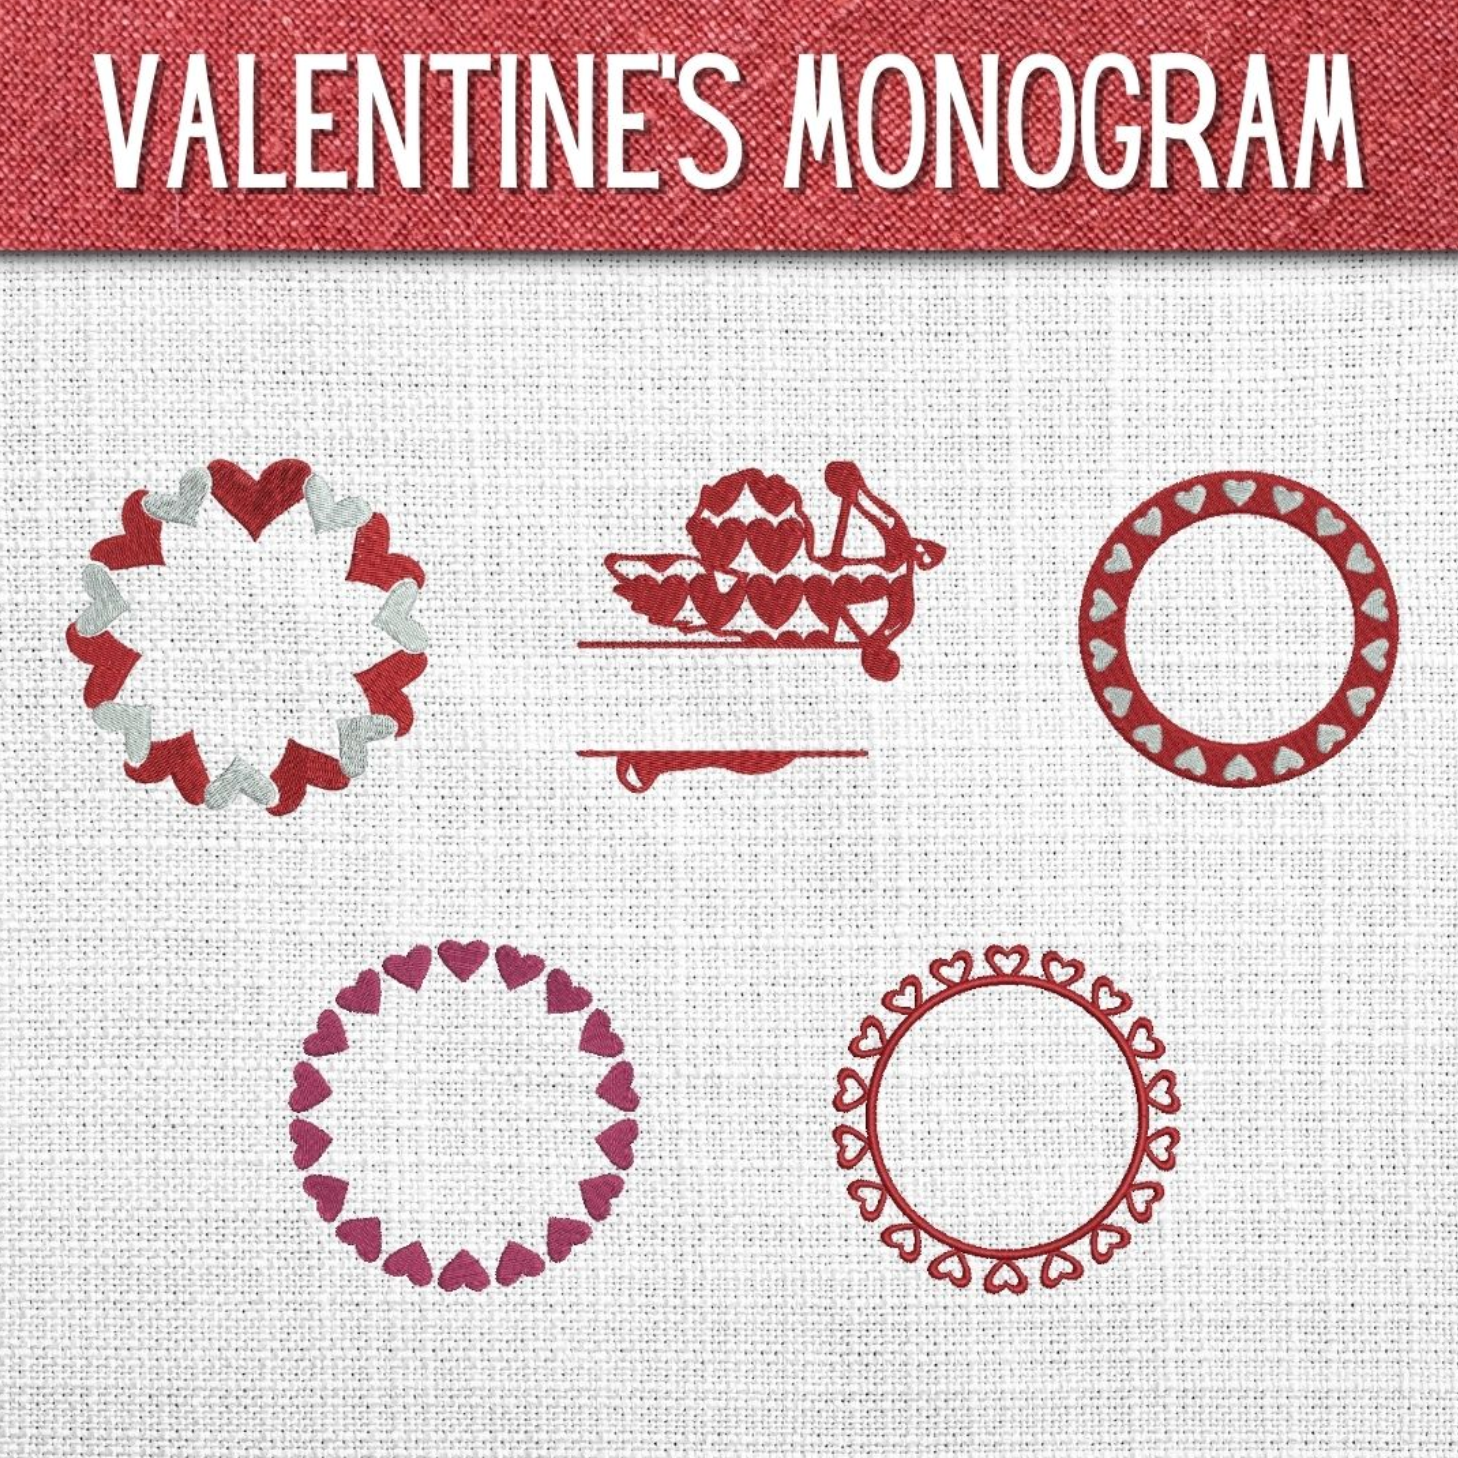 Valentines Monogram Embroidery Designs